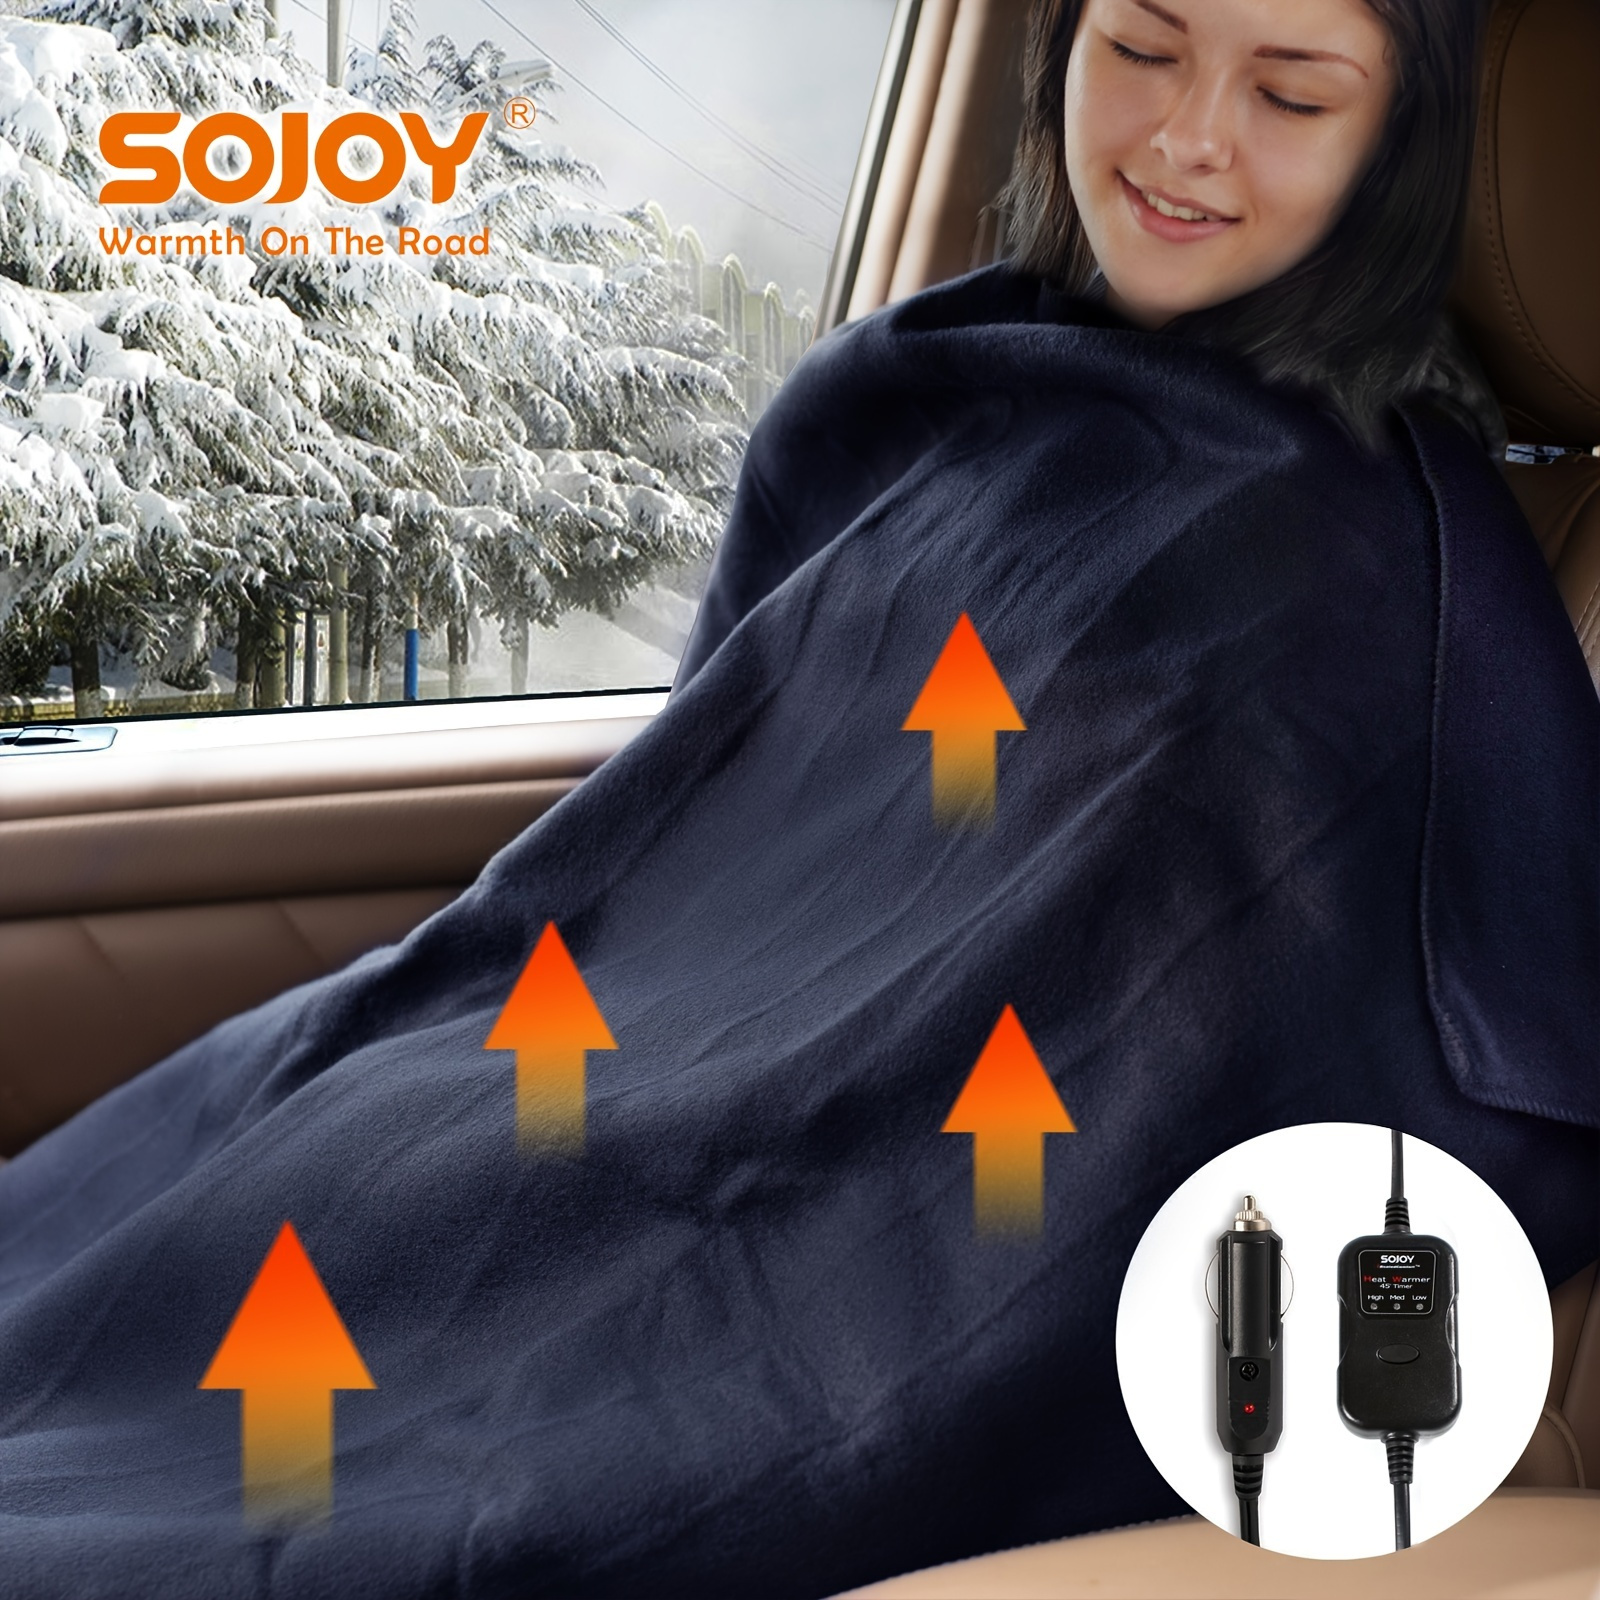 SJC Electric Blanket 60x 40 Portable Heated Travel Blanket with 3 Heating  Setting Fleece Car Blanket,Black&White